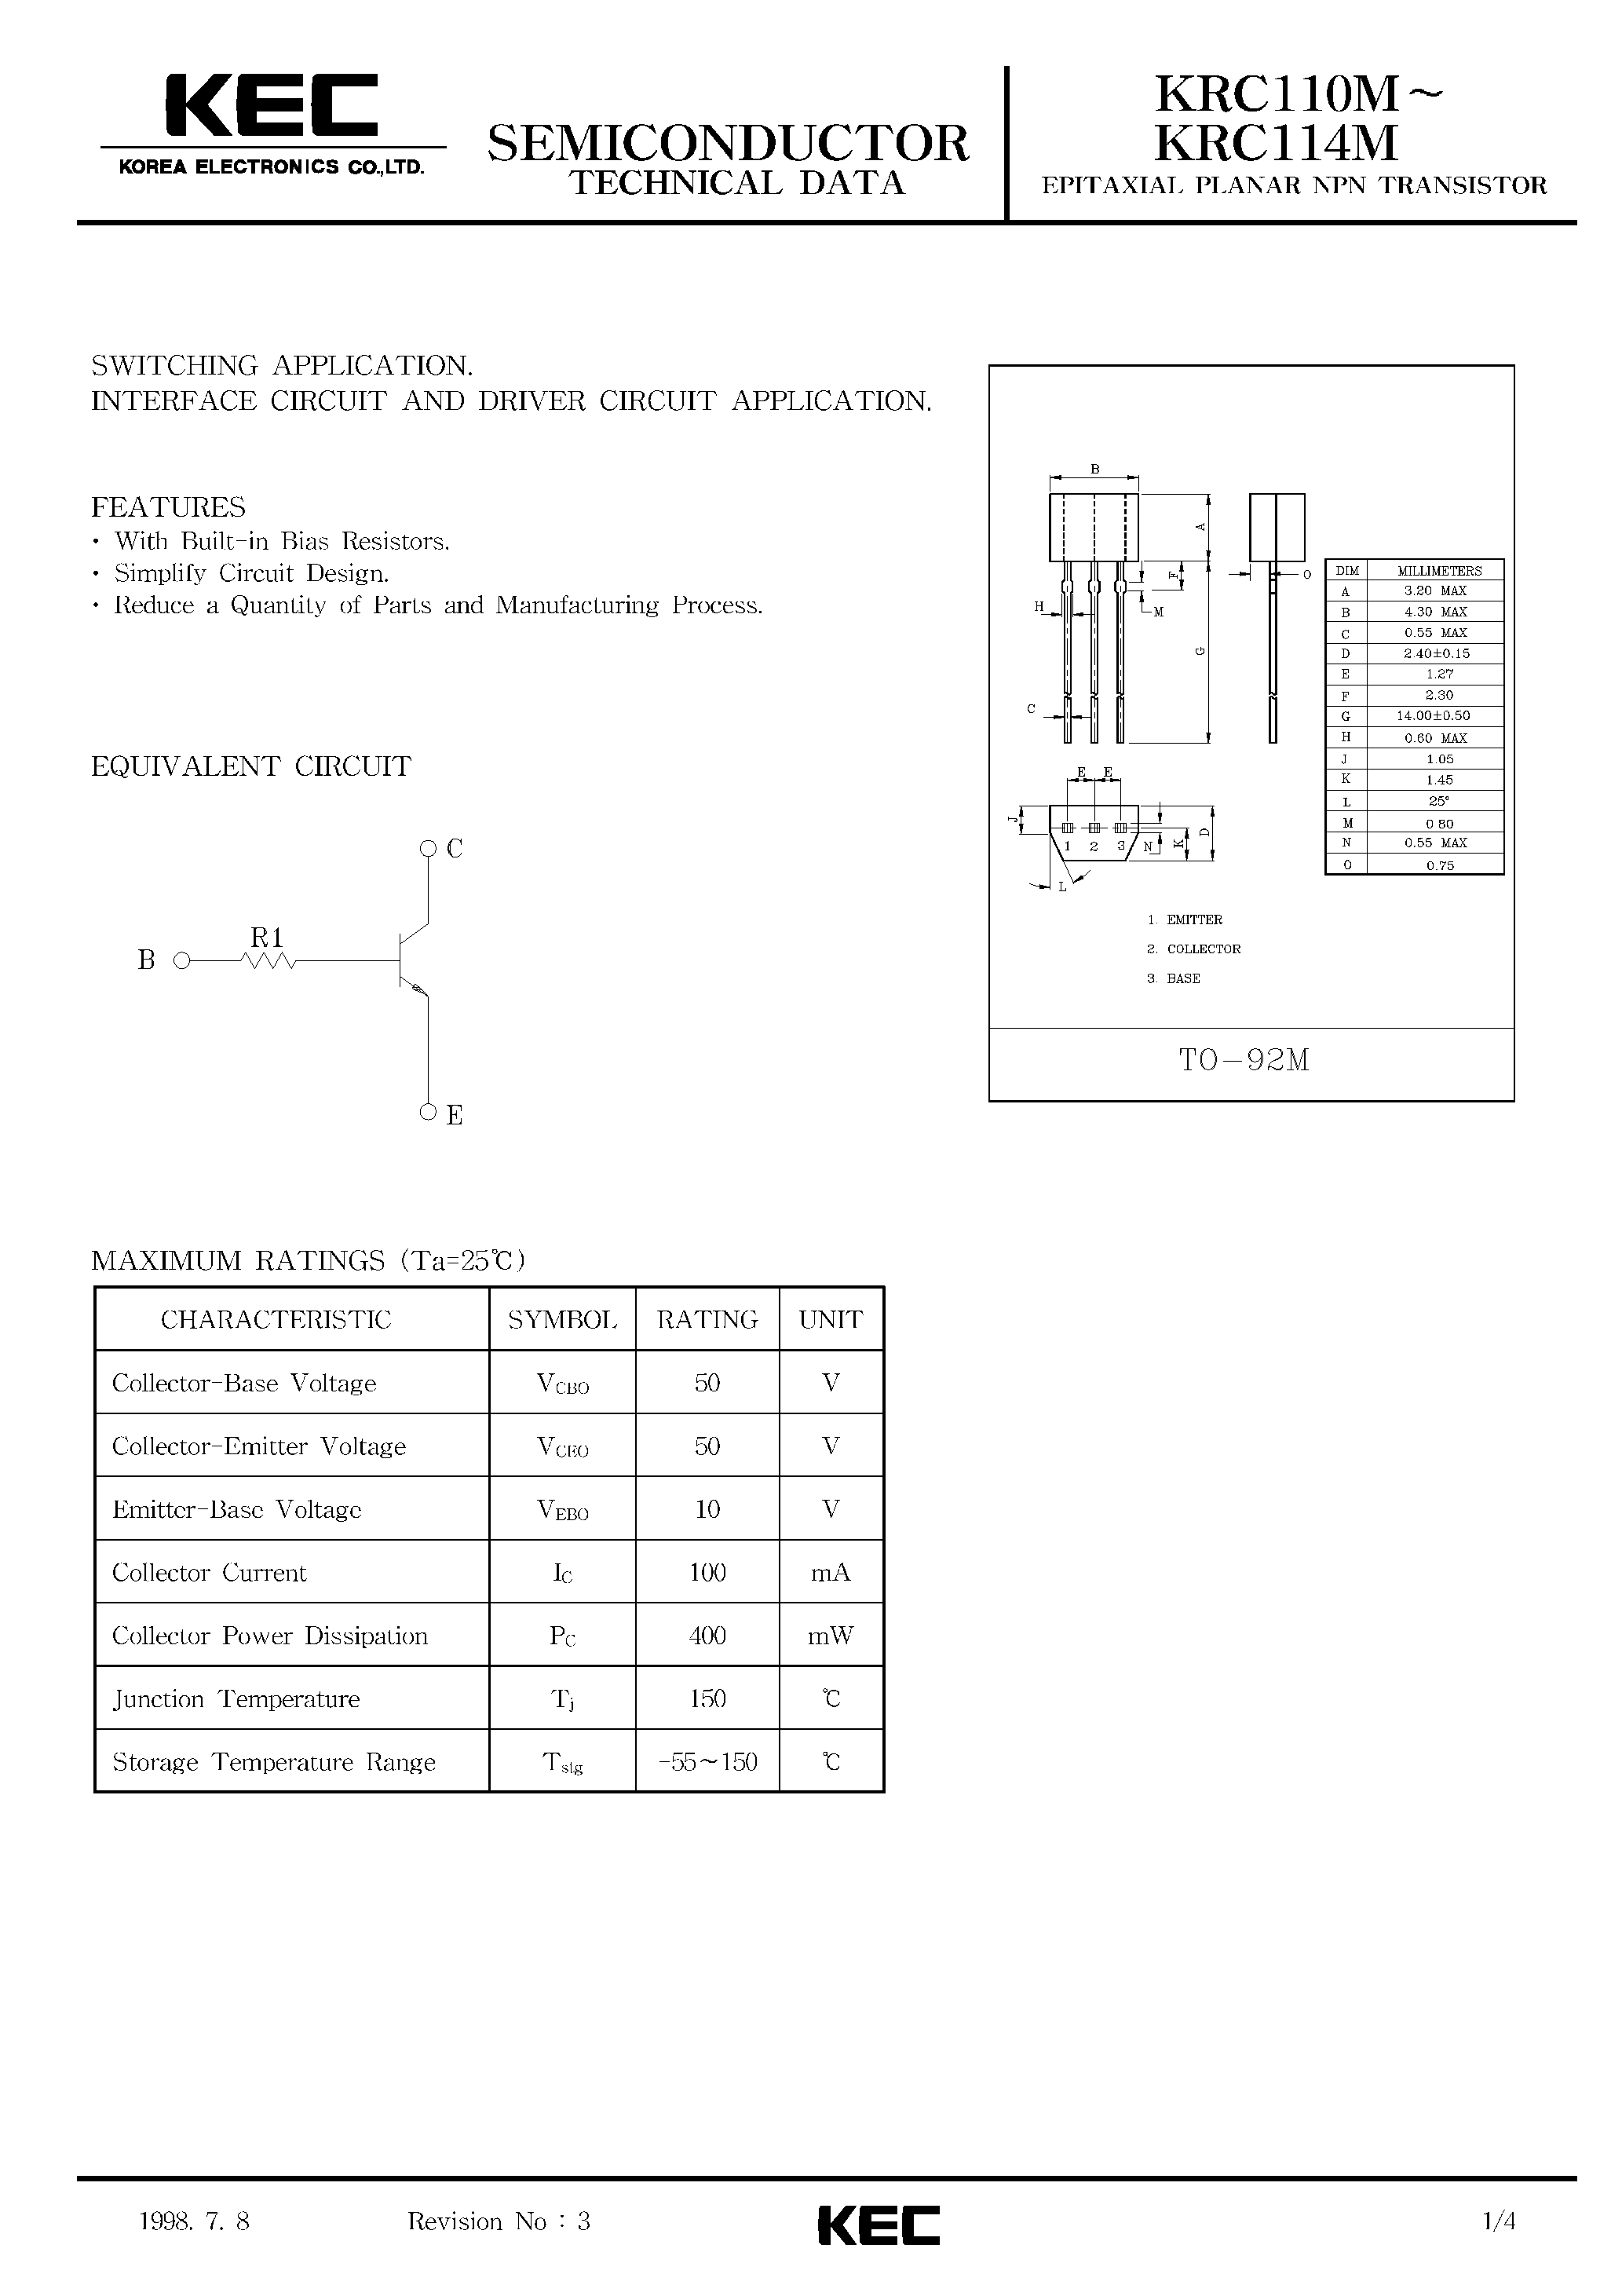 Datasheet KRC110M - (KRC110M - KRC114M) EPITAXIAL PLANAR PNP TRANSISTOR page 1